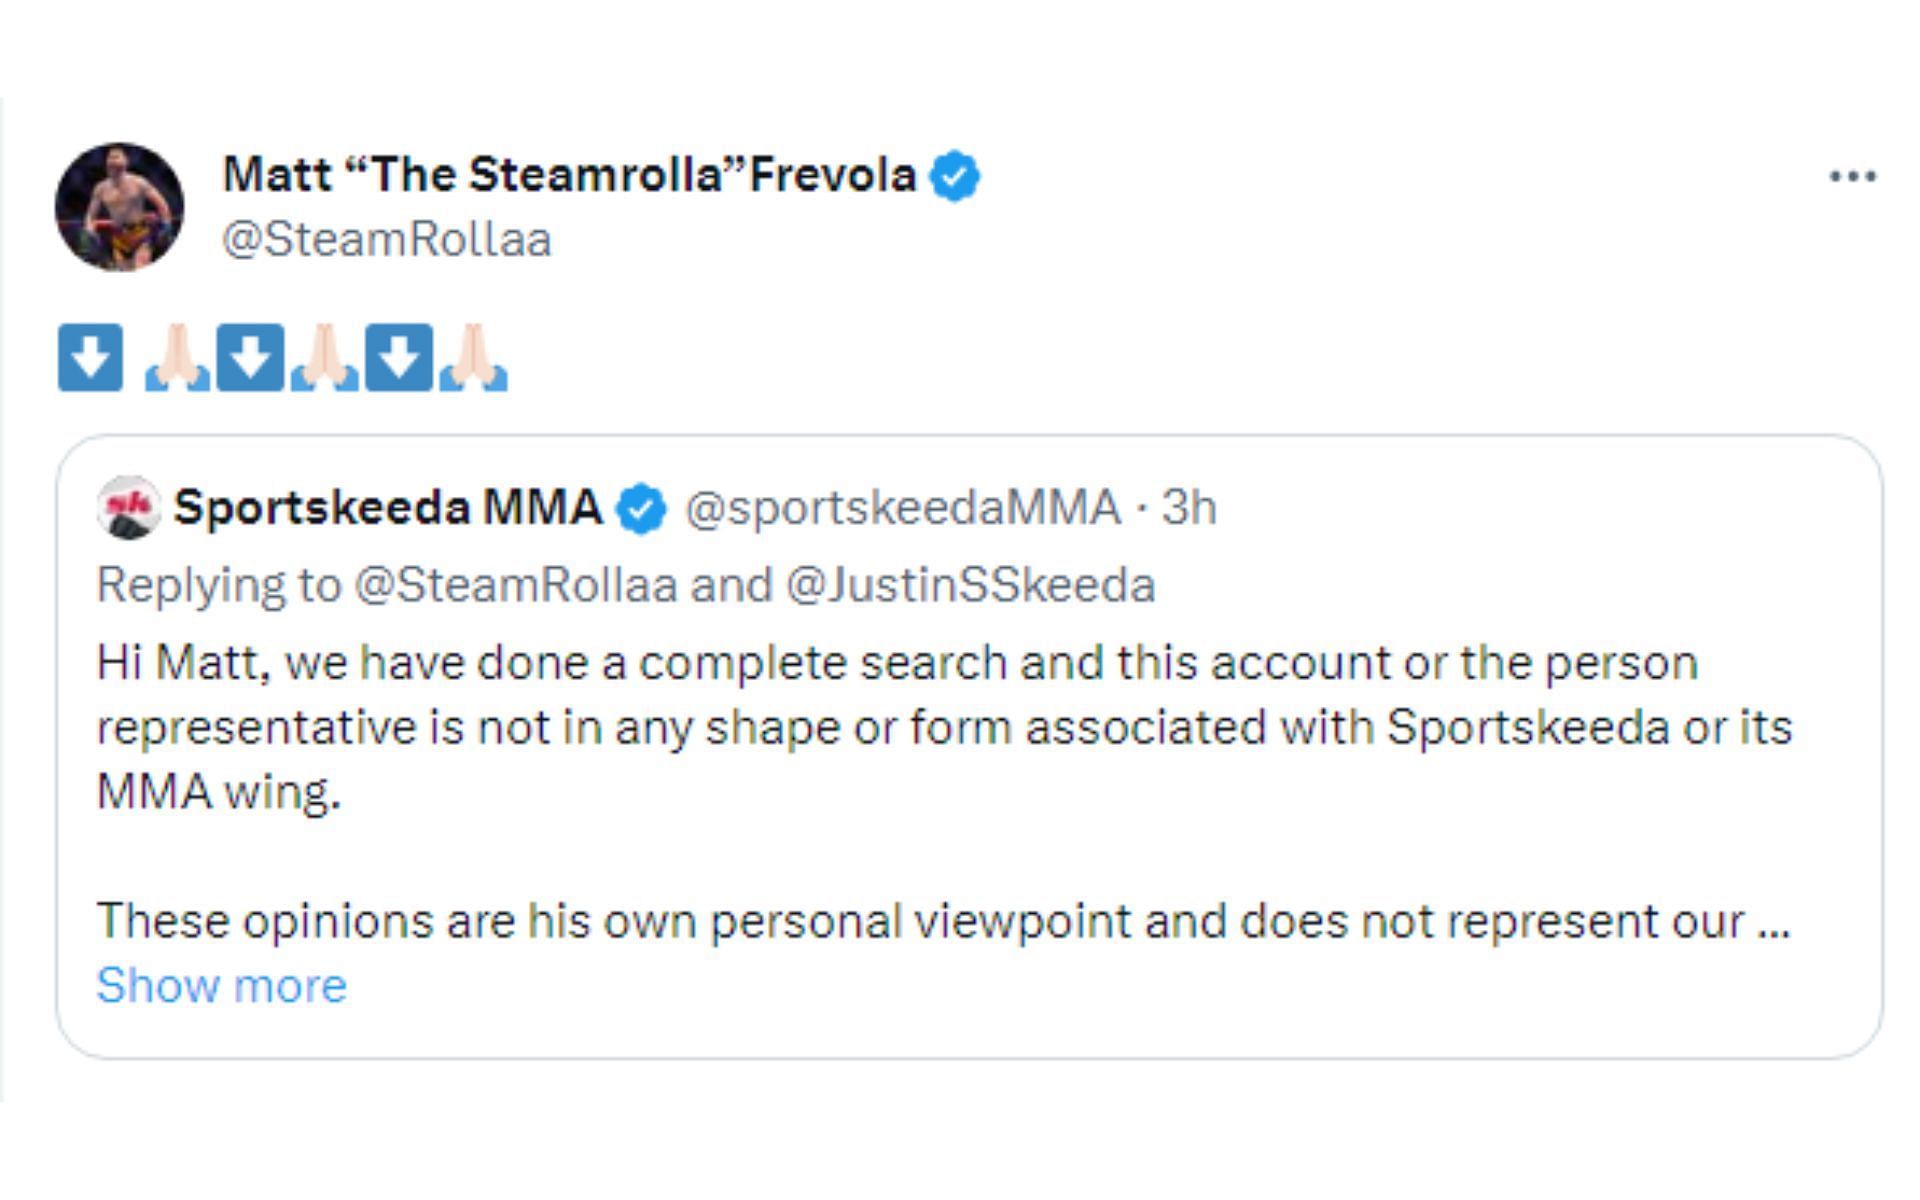 Matt Frevola response to the tweet